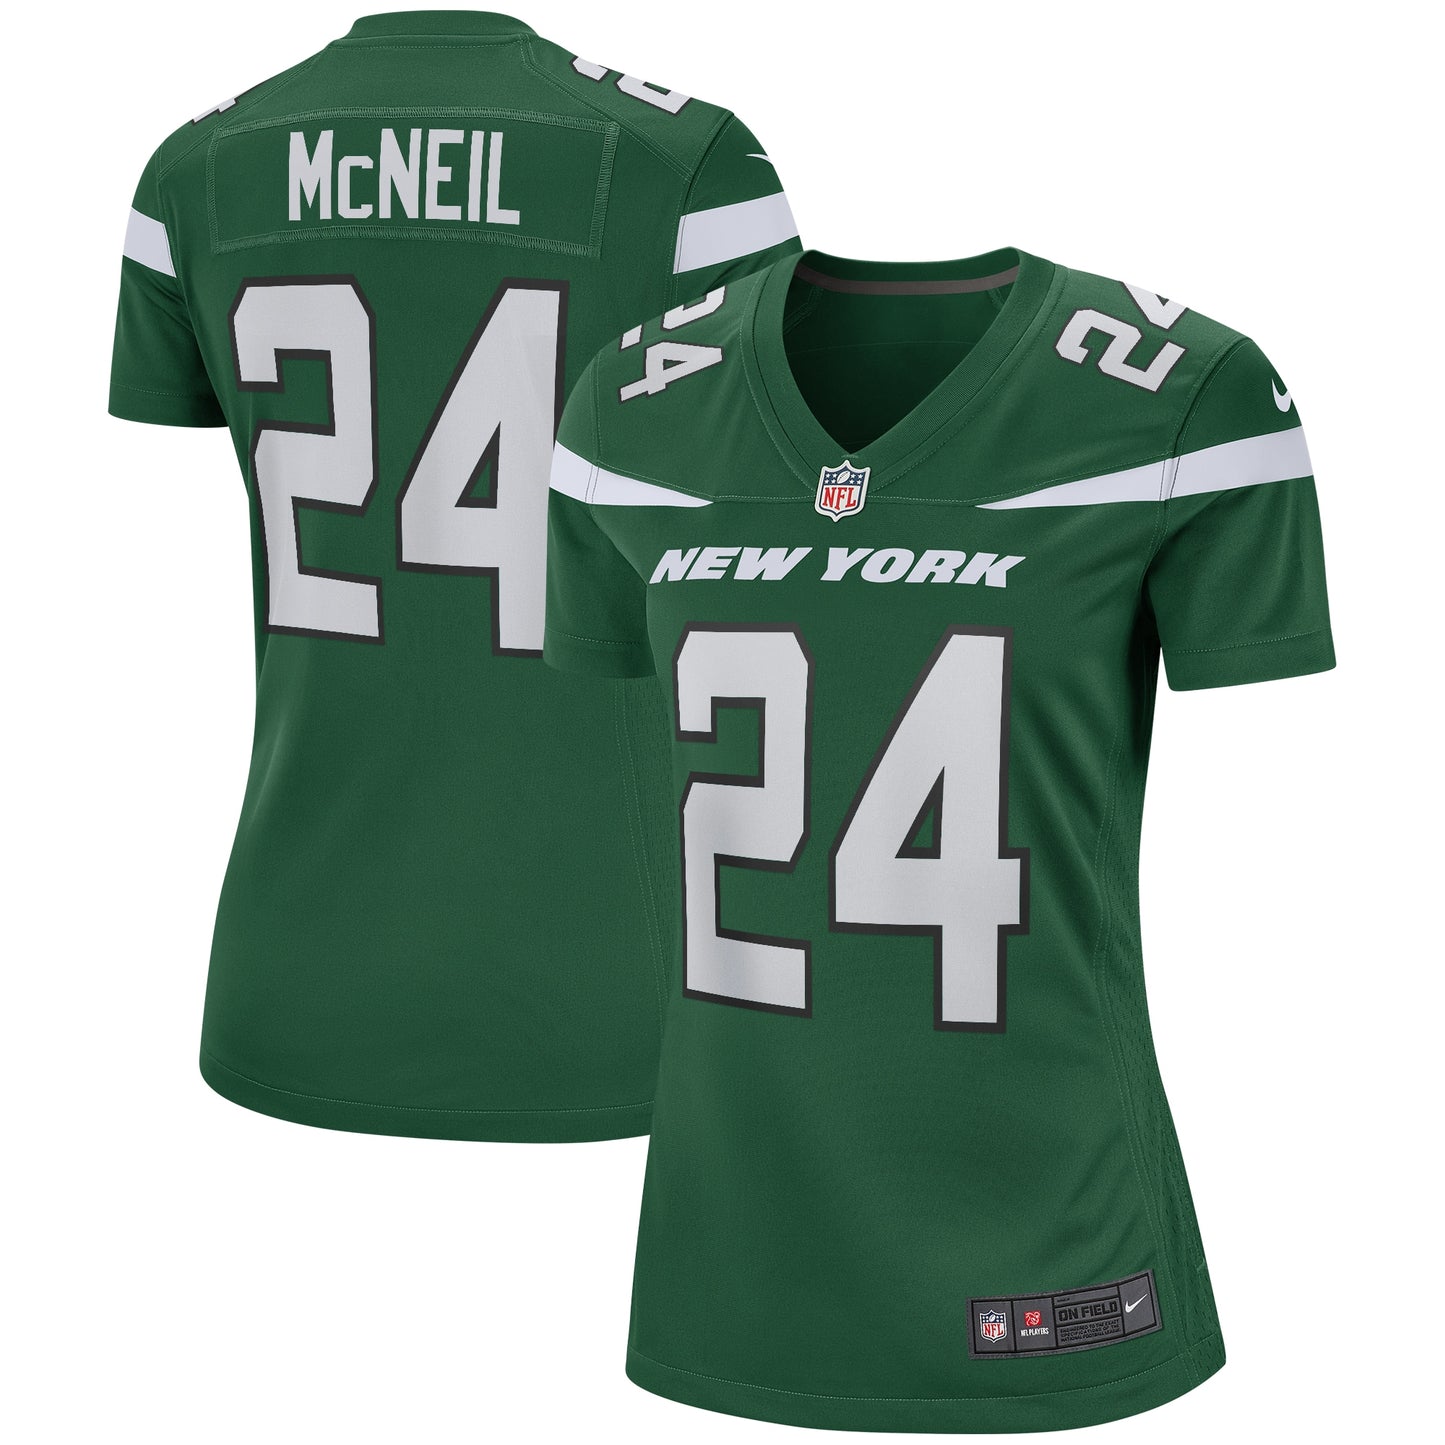 Freeman McNeil New York Jets Nike Women's Game Retired Player Jersey - Gotham Green